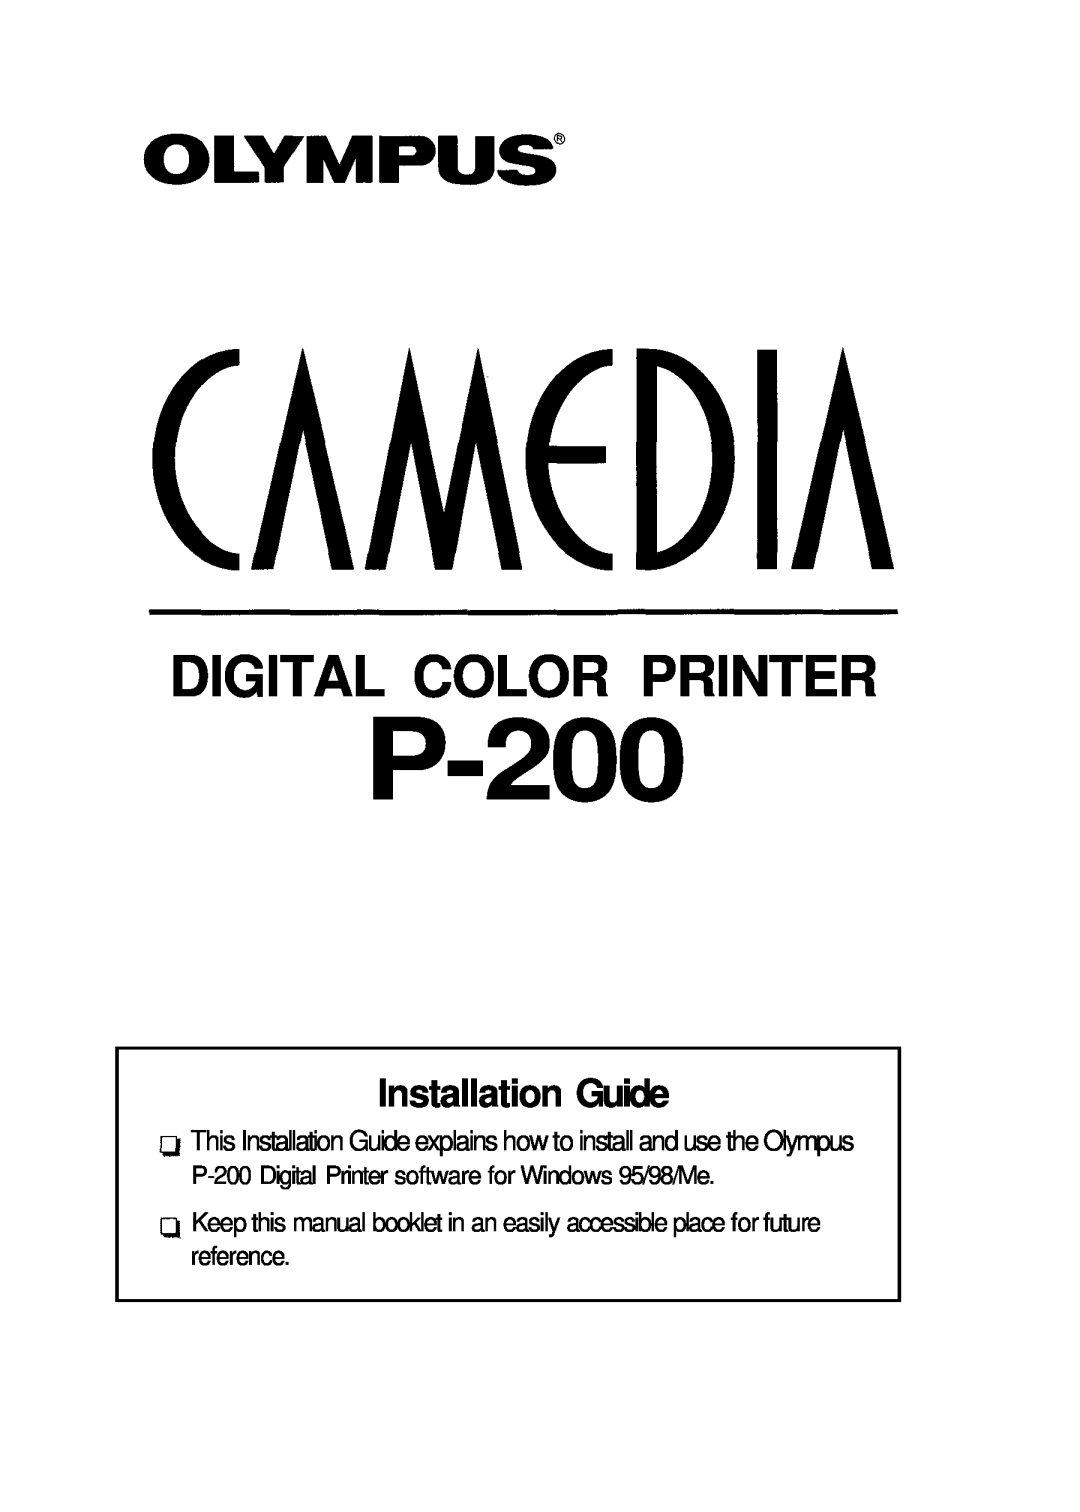 Olympus manual P-200 Digital Printer software for Windows 95/98/Me, Digital Color Printer, Installation Guide 